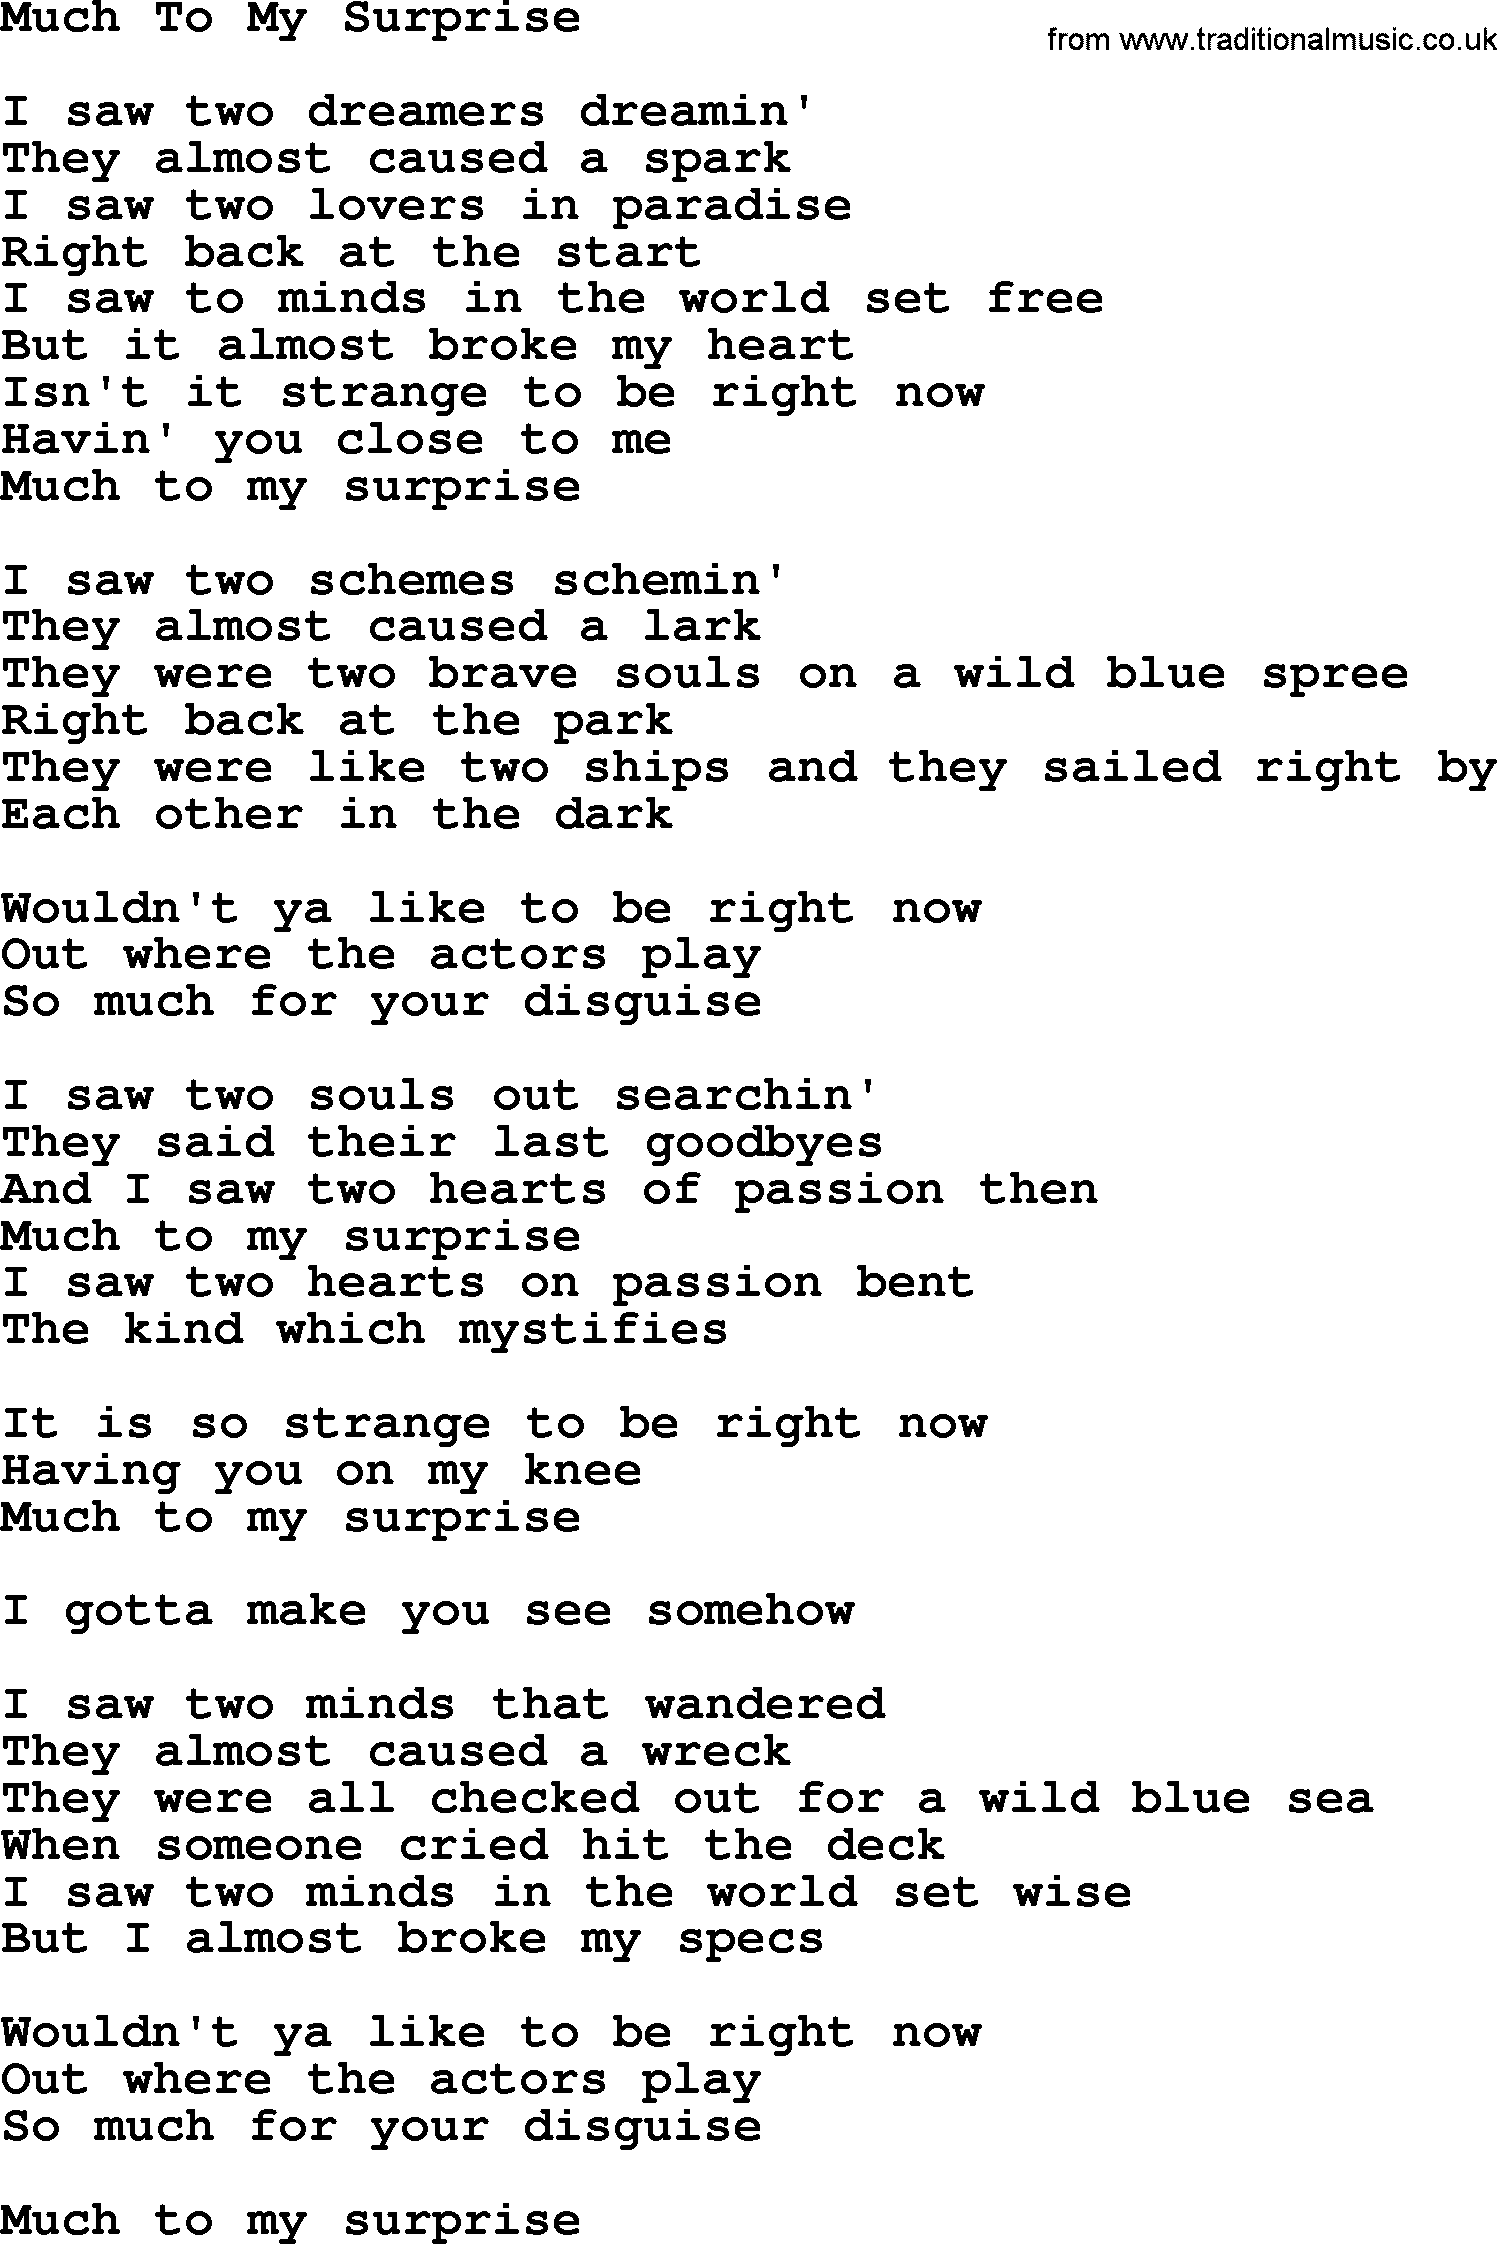 Gordon Lightfoot song Much To My Surprise, lyrics